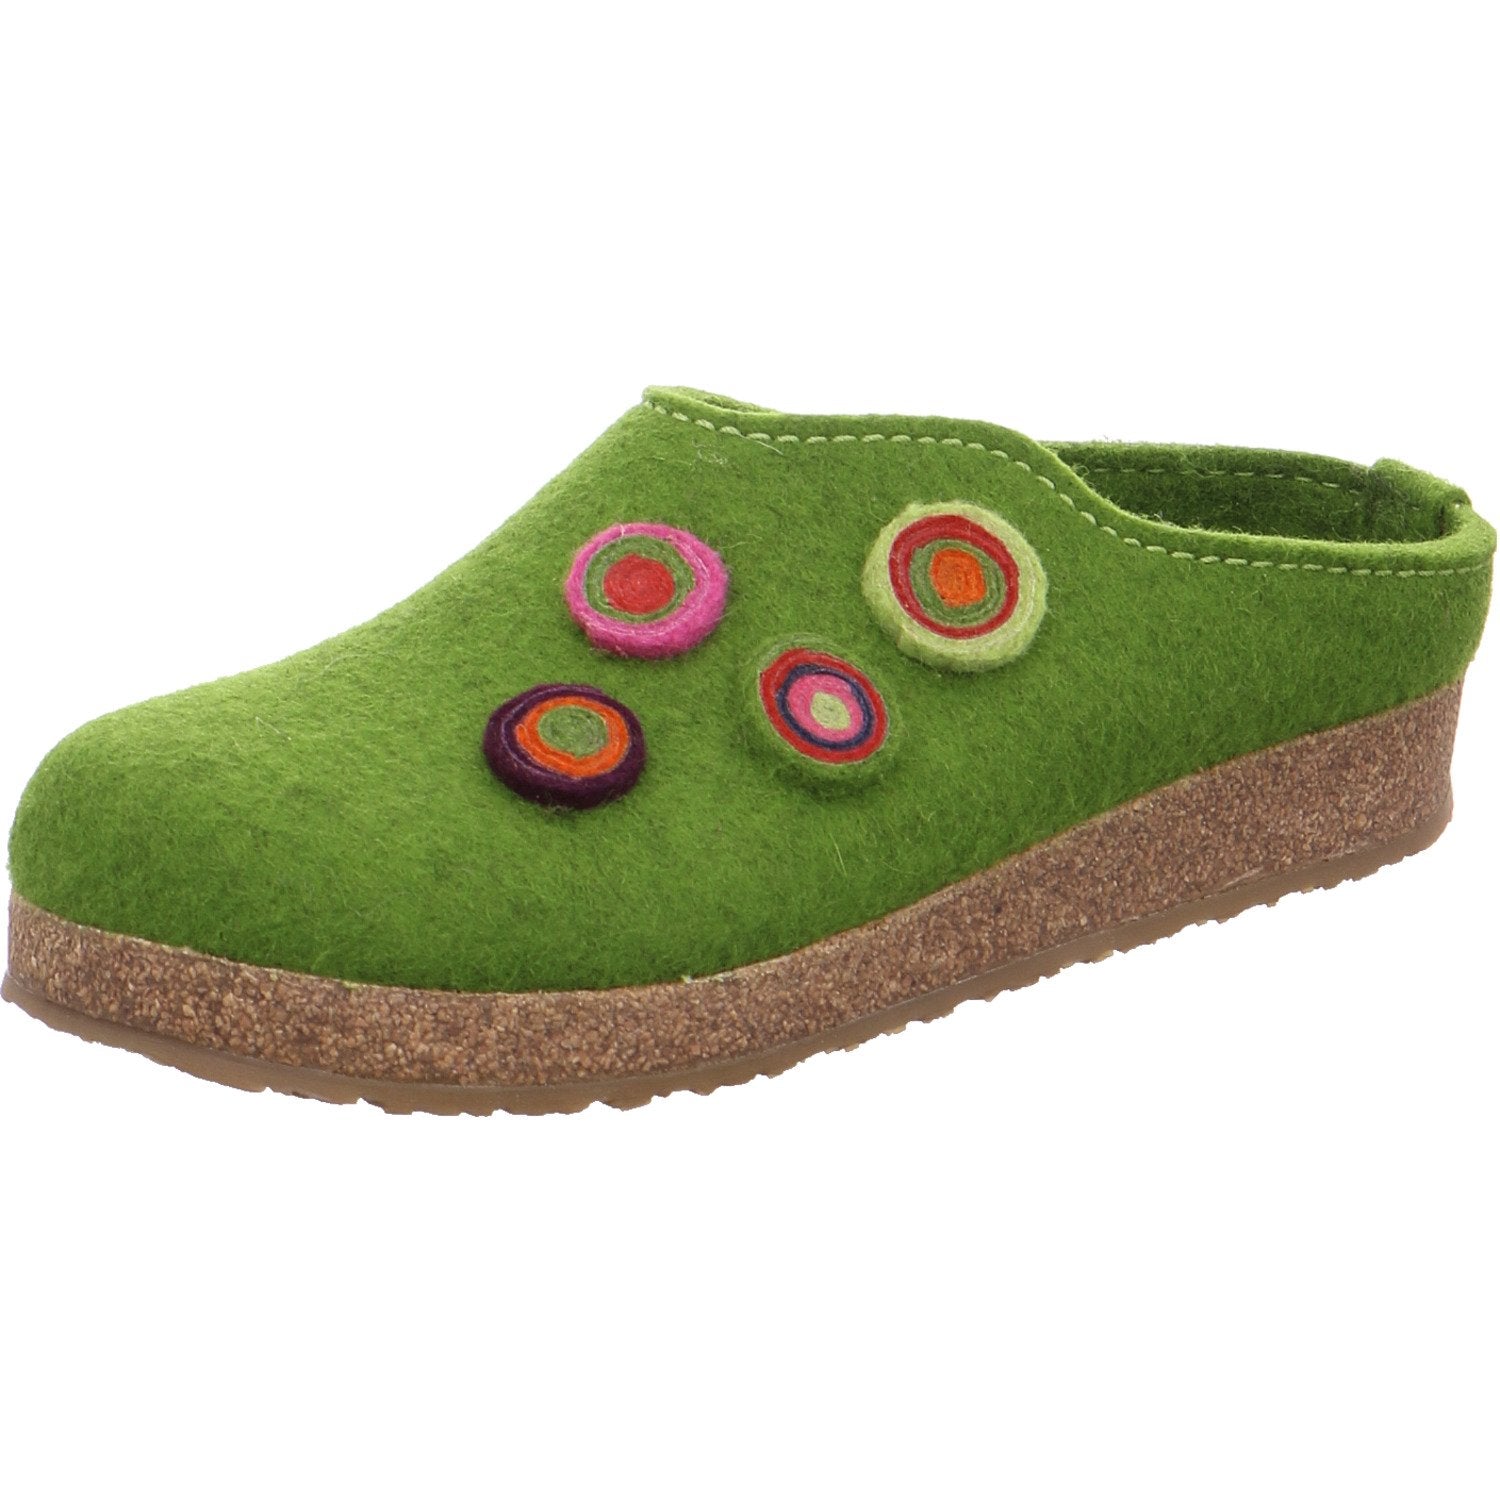 Haflinger Kanon Slippers Clogs Mules Wool Felt Scuffs Slip On House Shoes Green - Bartel-Shop